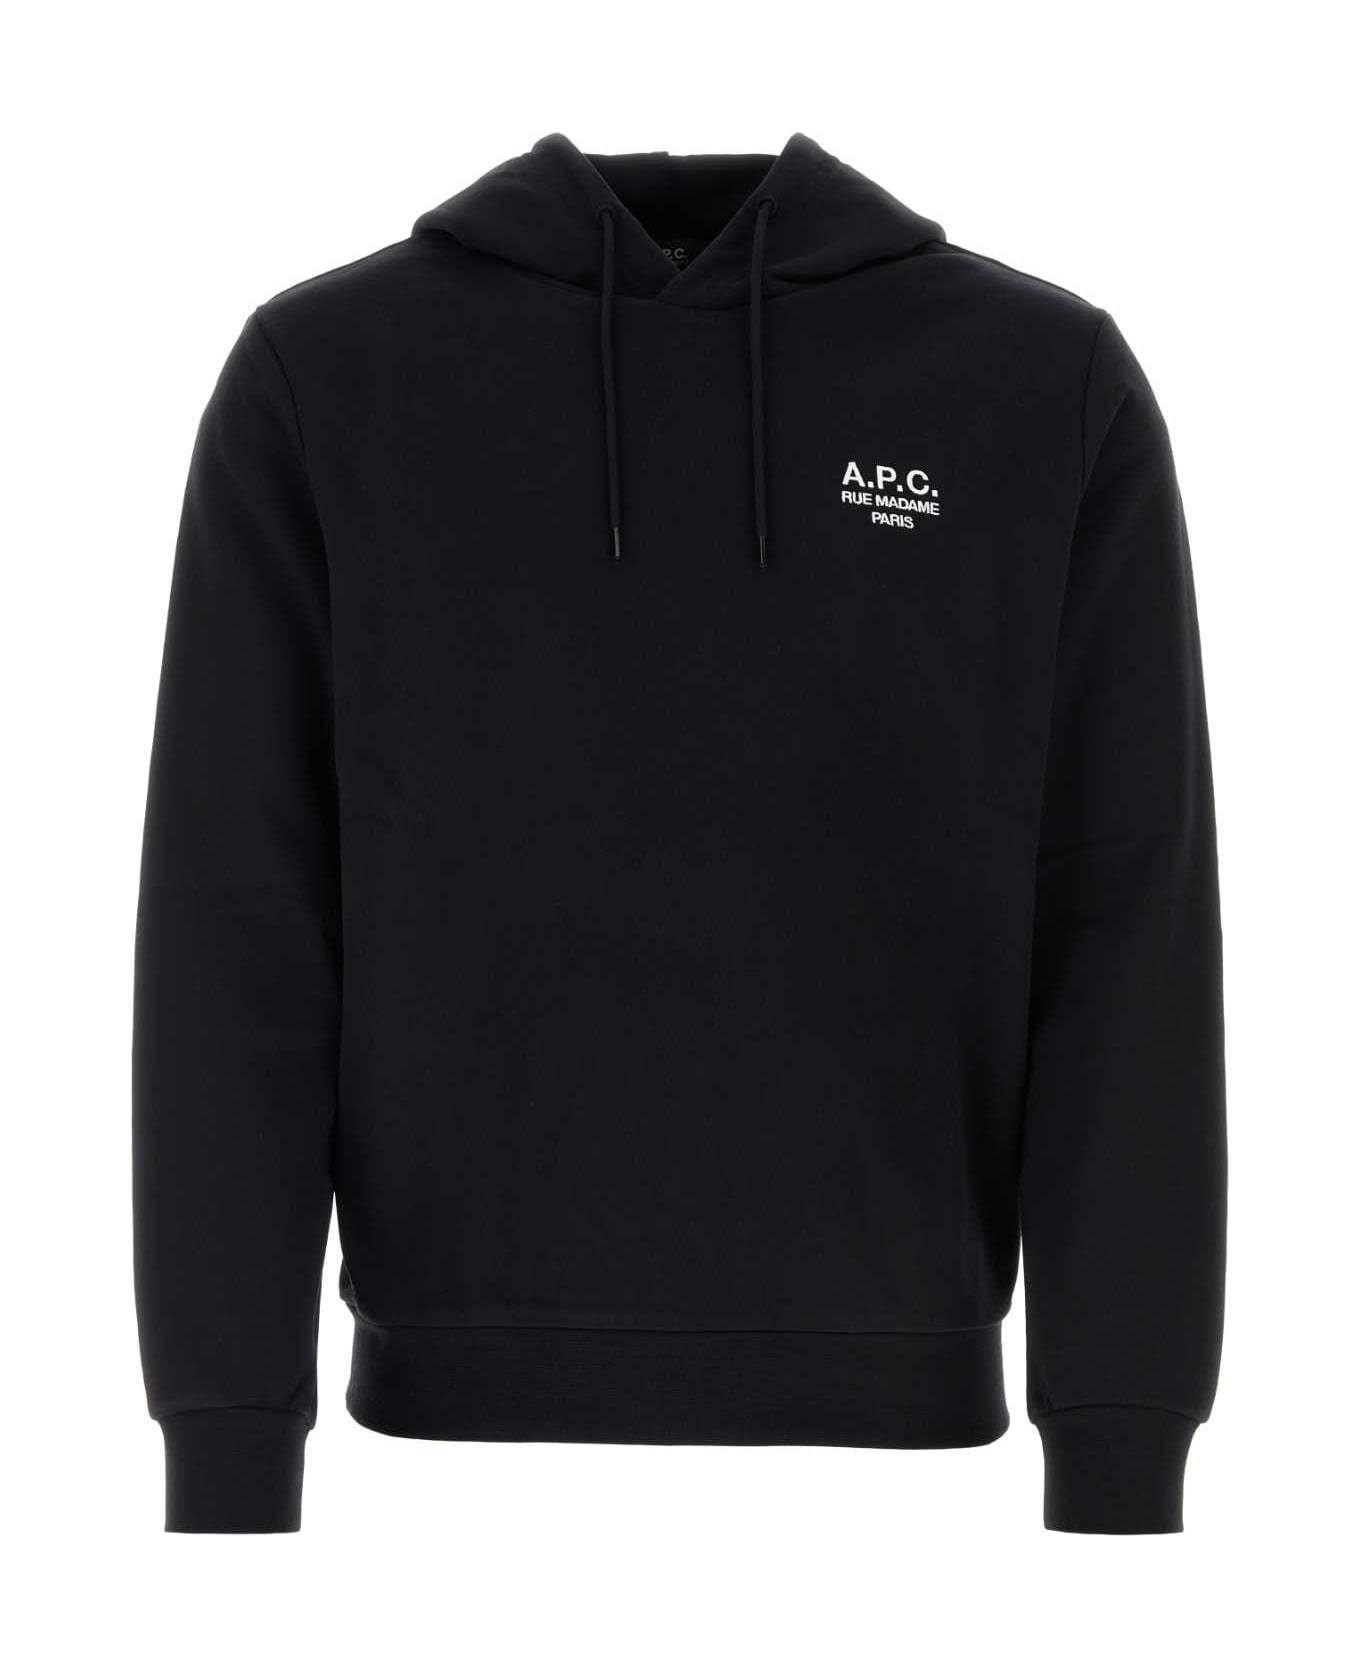 A.P.C. Black Cotton Sweatshirt - NOIRBLANC